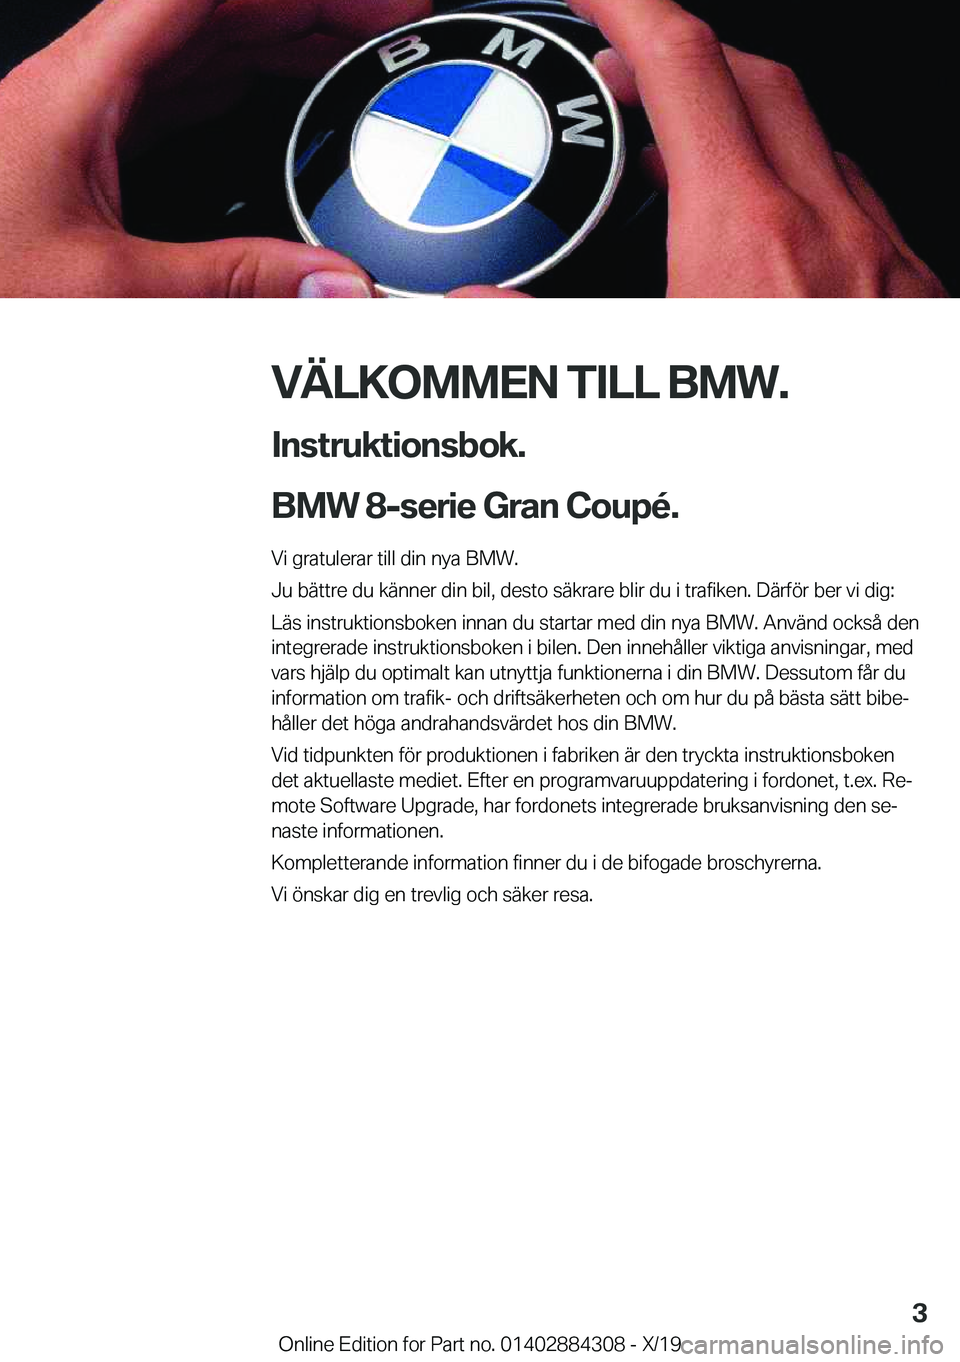 BMW 8 SERIES GRAN COUPE 2020  InstruktionsbÖcker (in Swedish) �V�Ä�L�K�O�M�M�E�N��T�I�L�L��B�M�W�.�I�n�s�t�r�u�k�t�i�o�n�s�b�o�k�.
�B�M�W��8�-�s�e�r�i�e��G�r�a�n��C�o�u�p�